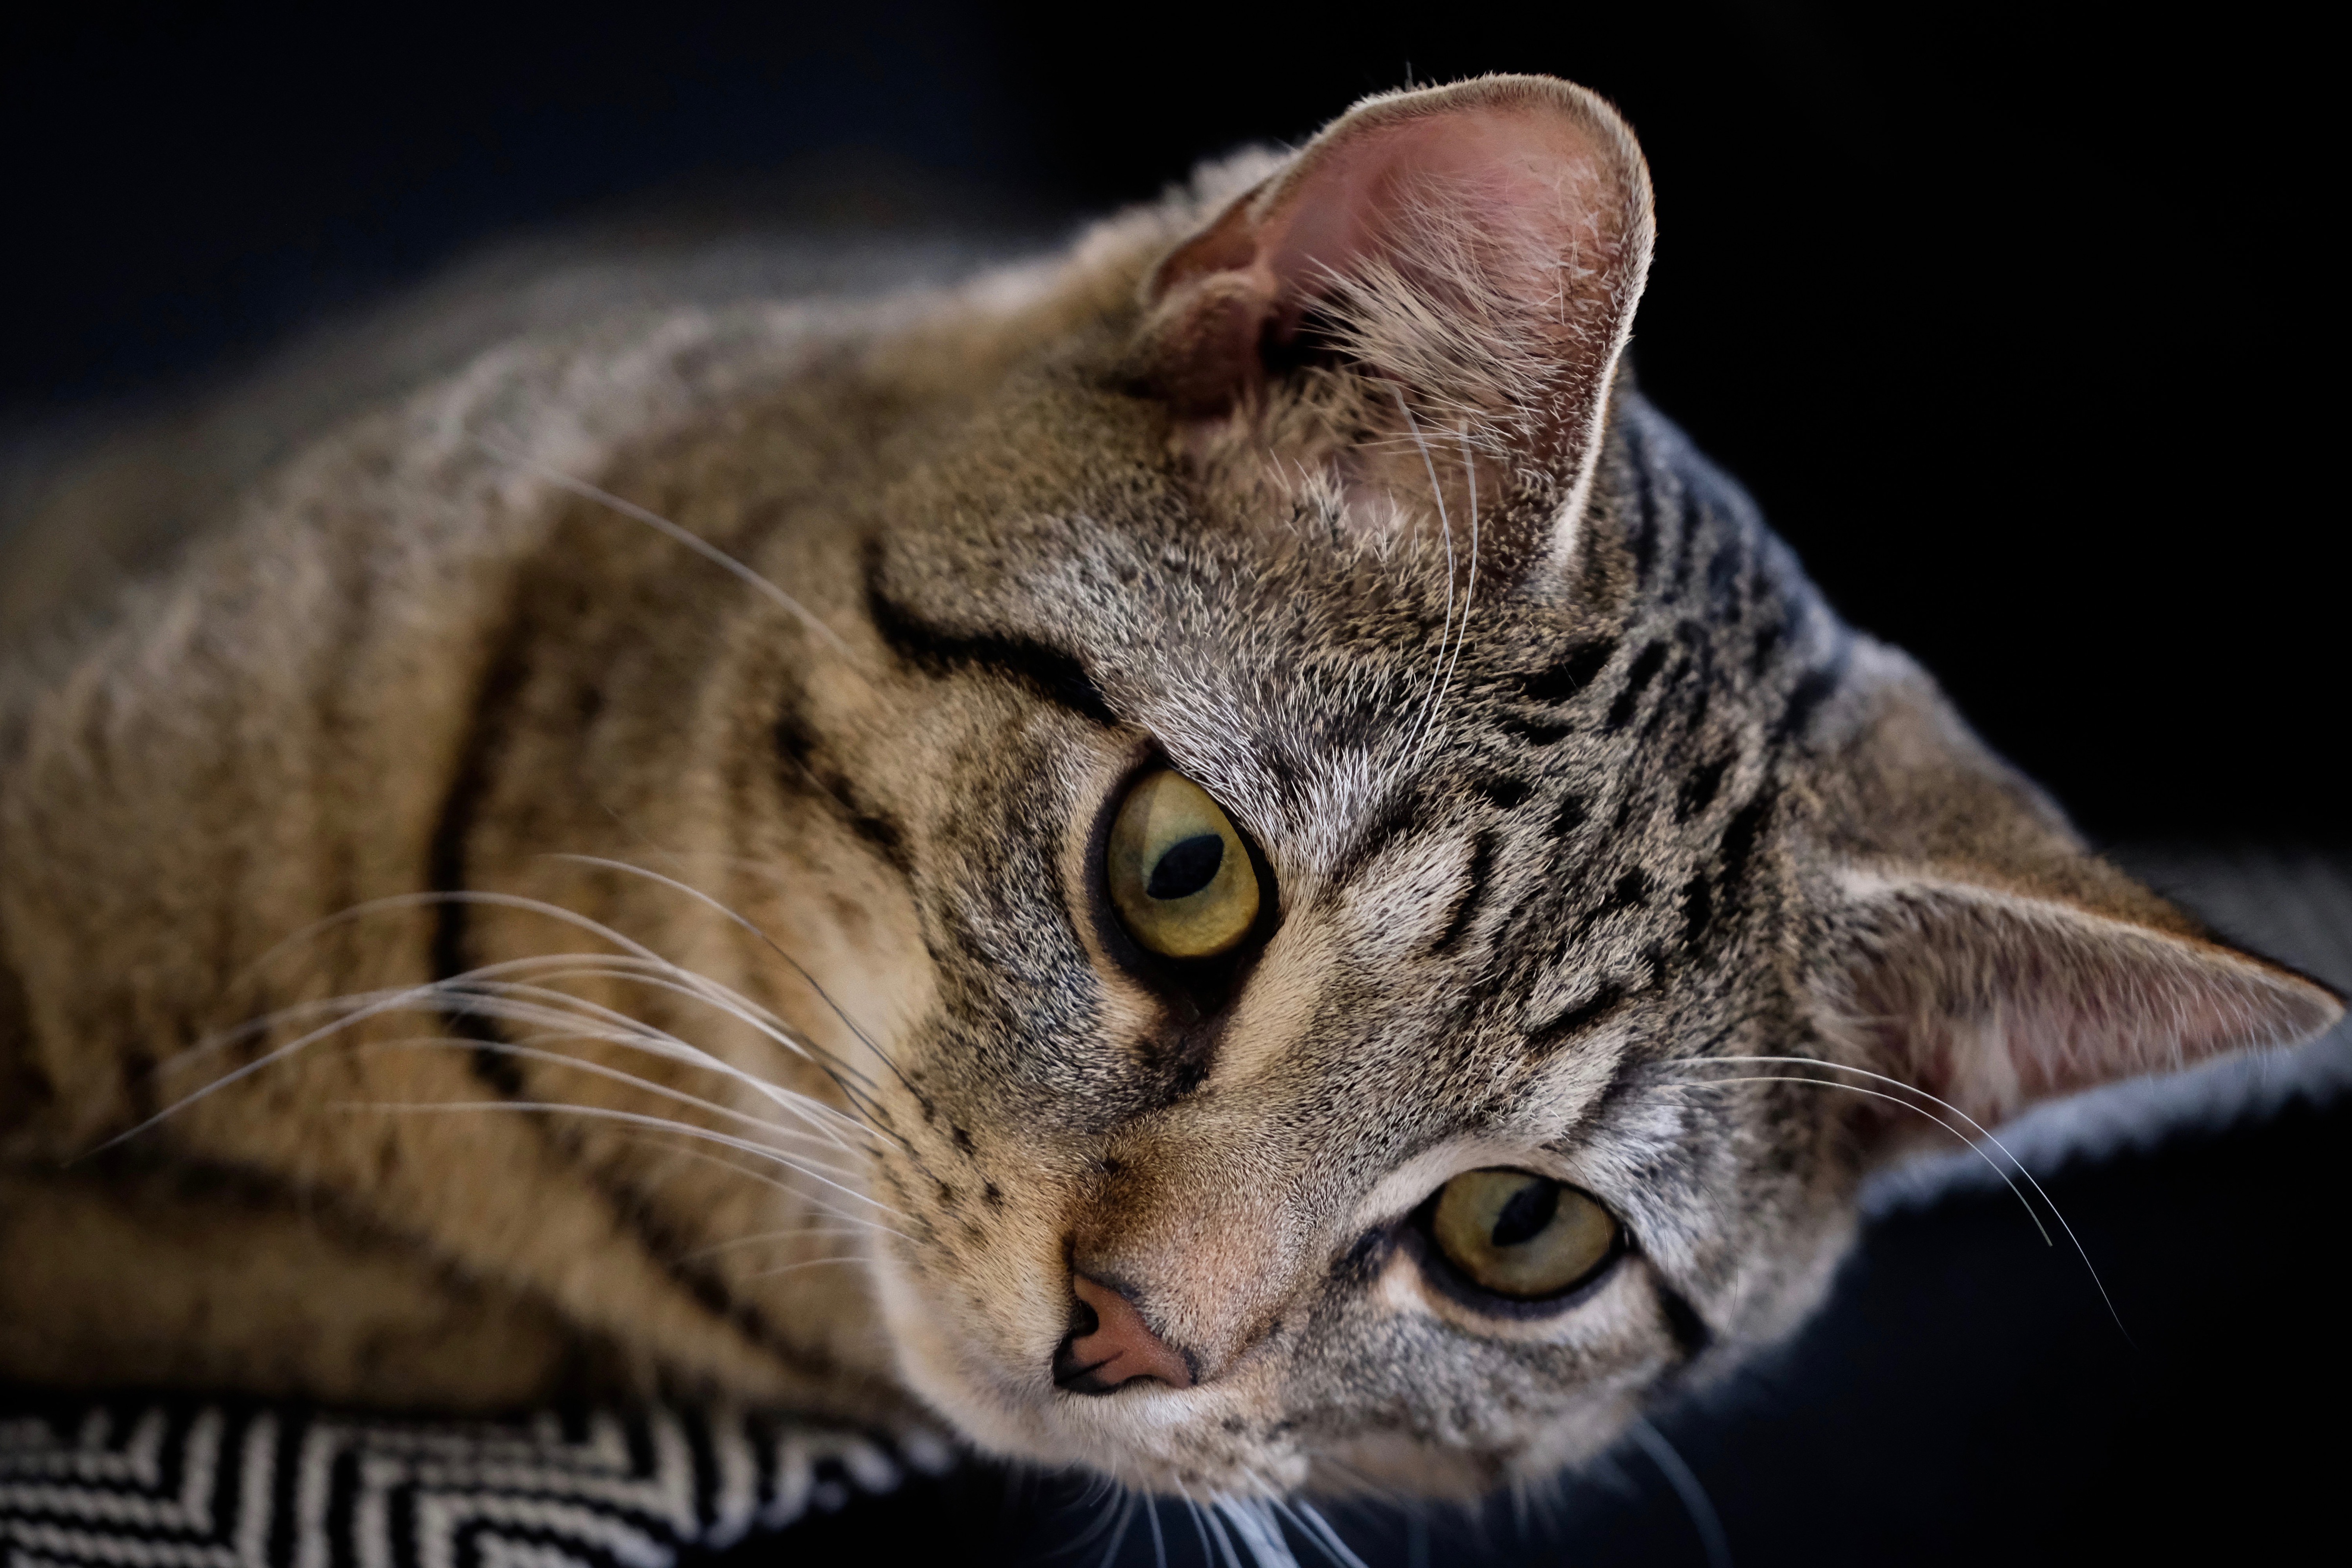 Animal Cat 4k Ultra HD Wallpaper